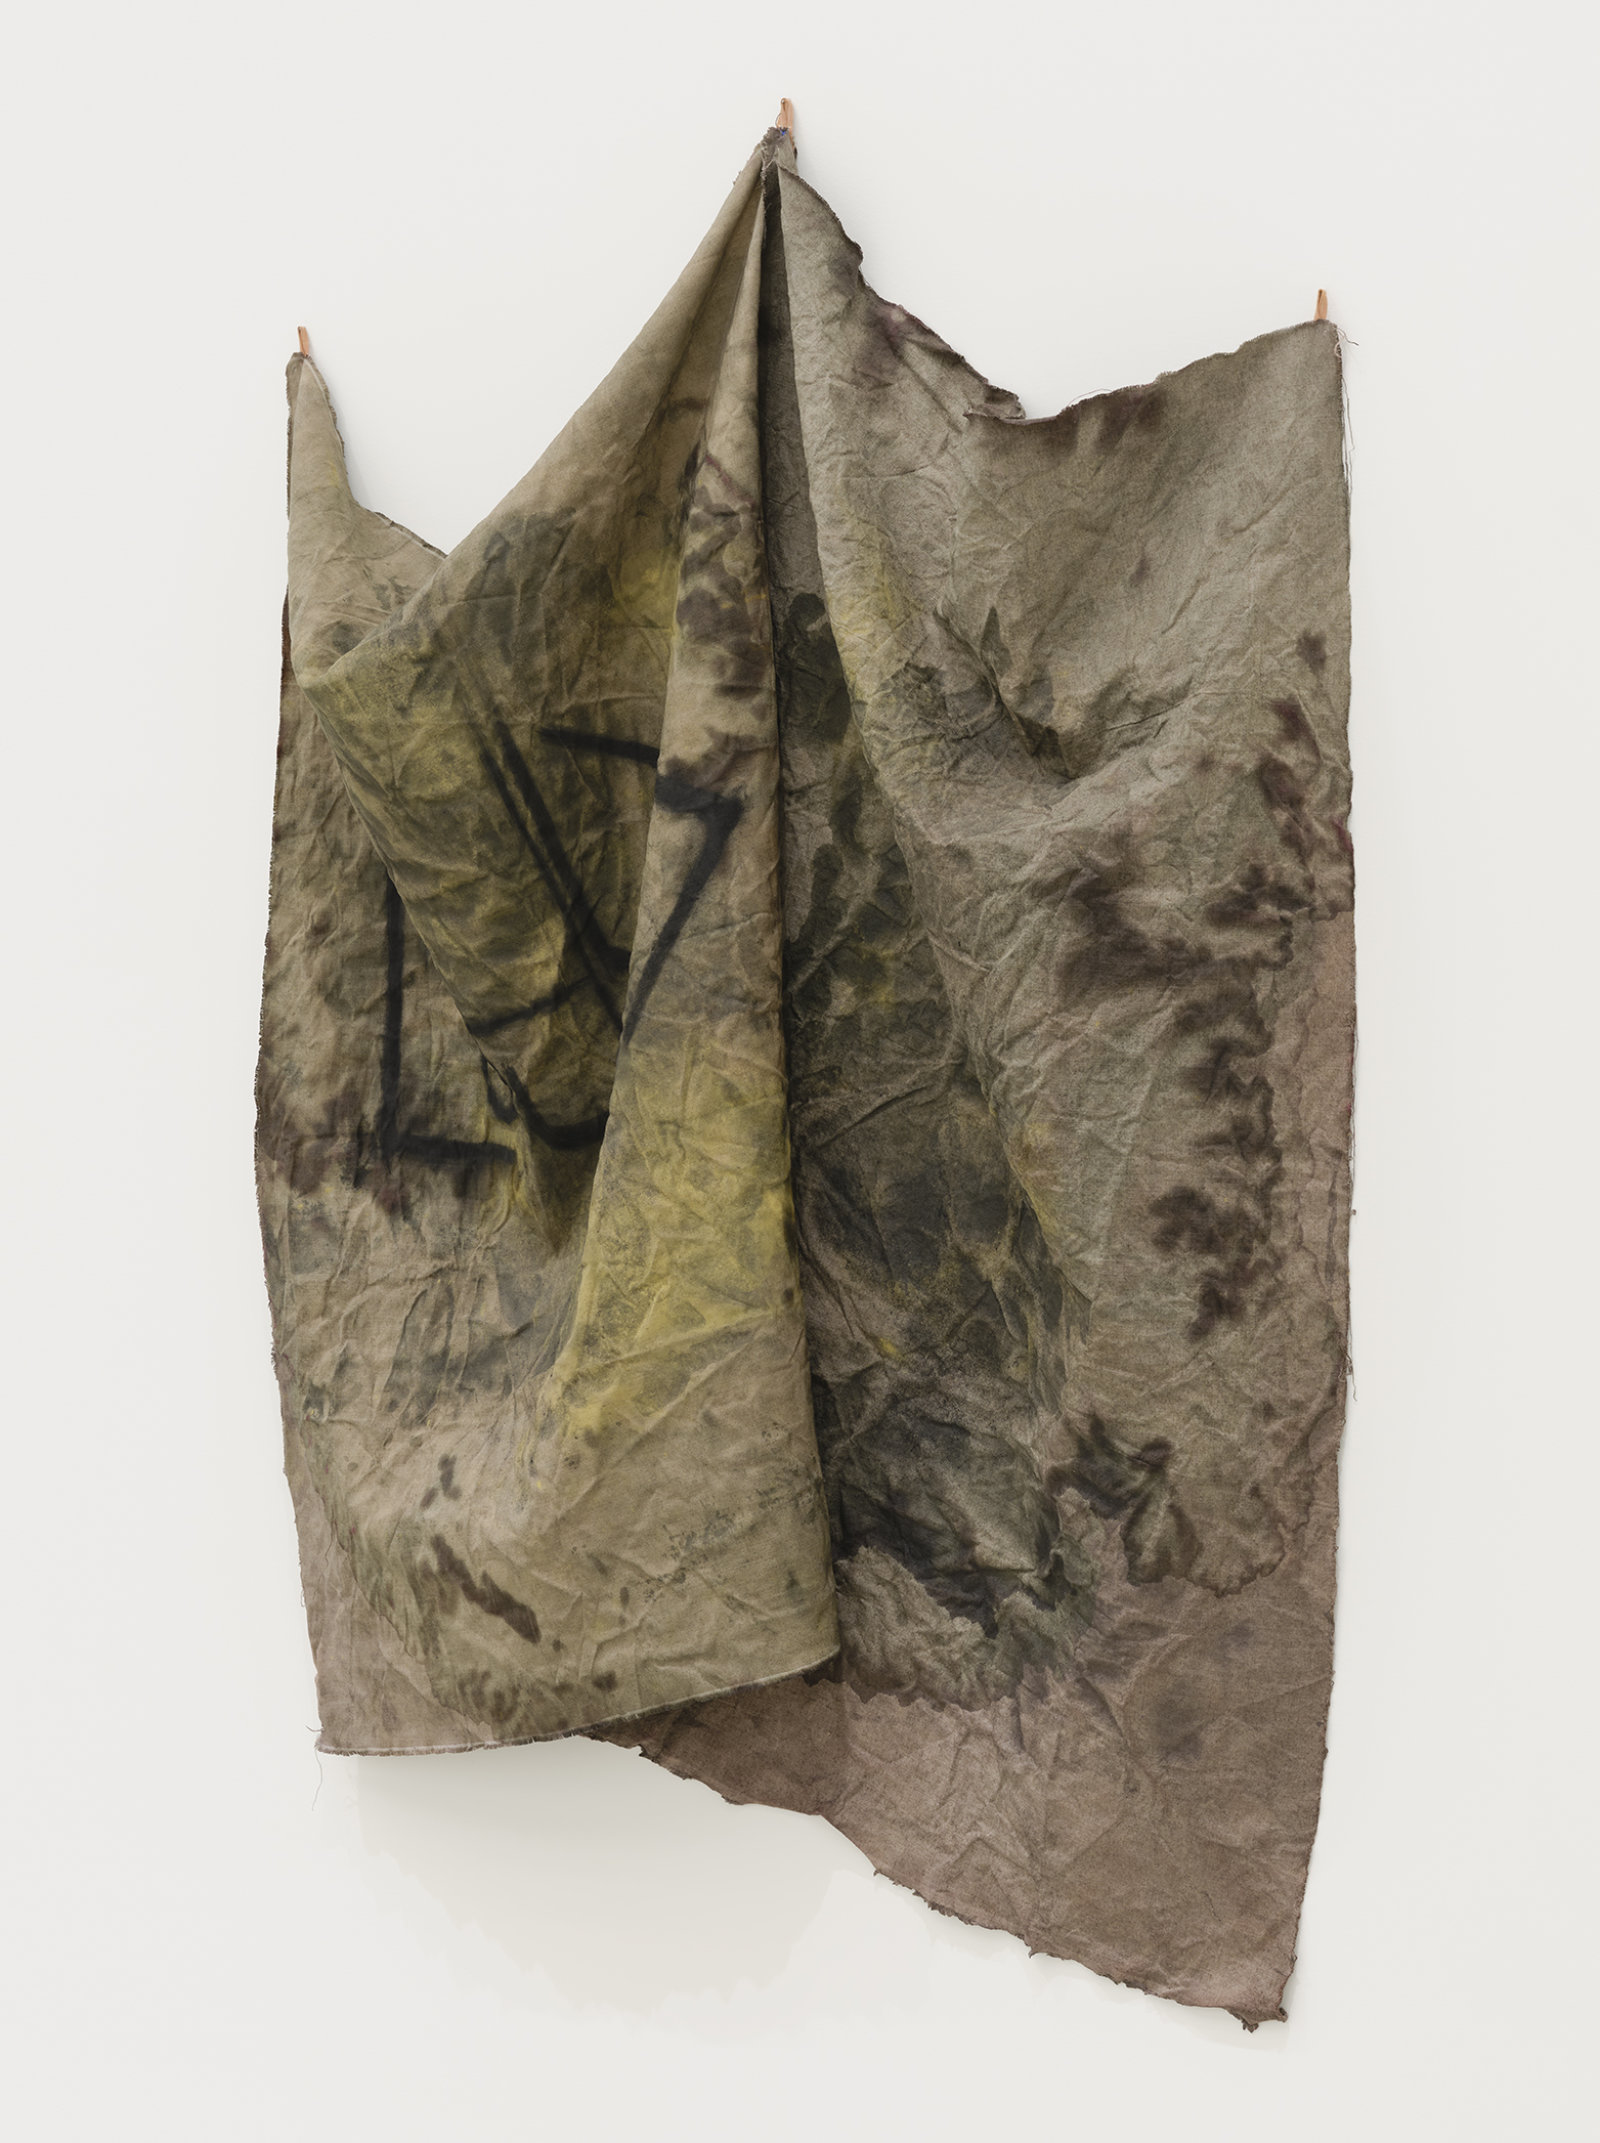 Duane Linklater, bugjuice, 2021, digital print on linen, cochineal dye, yellow ochre, honey, charcoal, nails, 66 x 45 x 9 in. (168 x 114 x 22 cm)